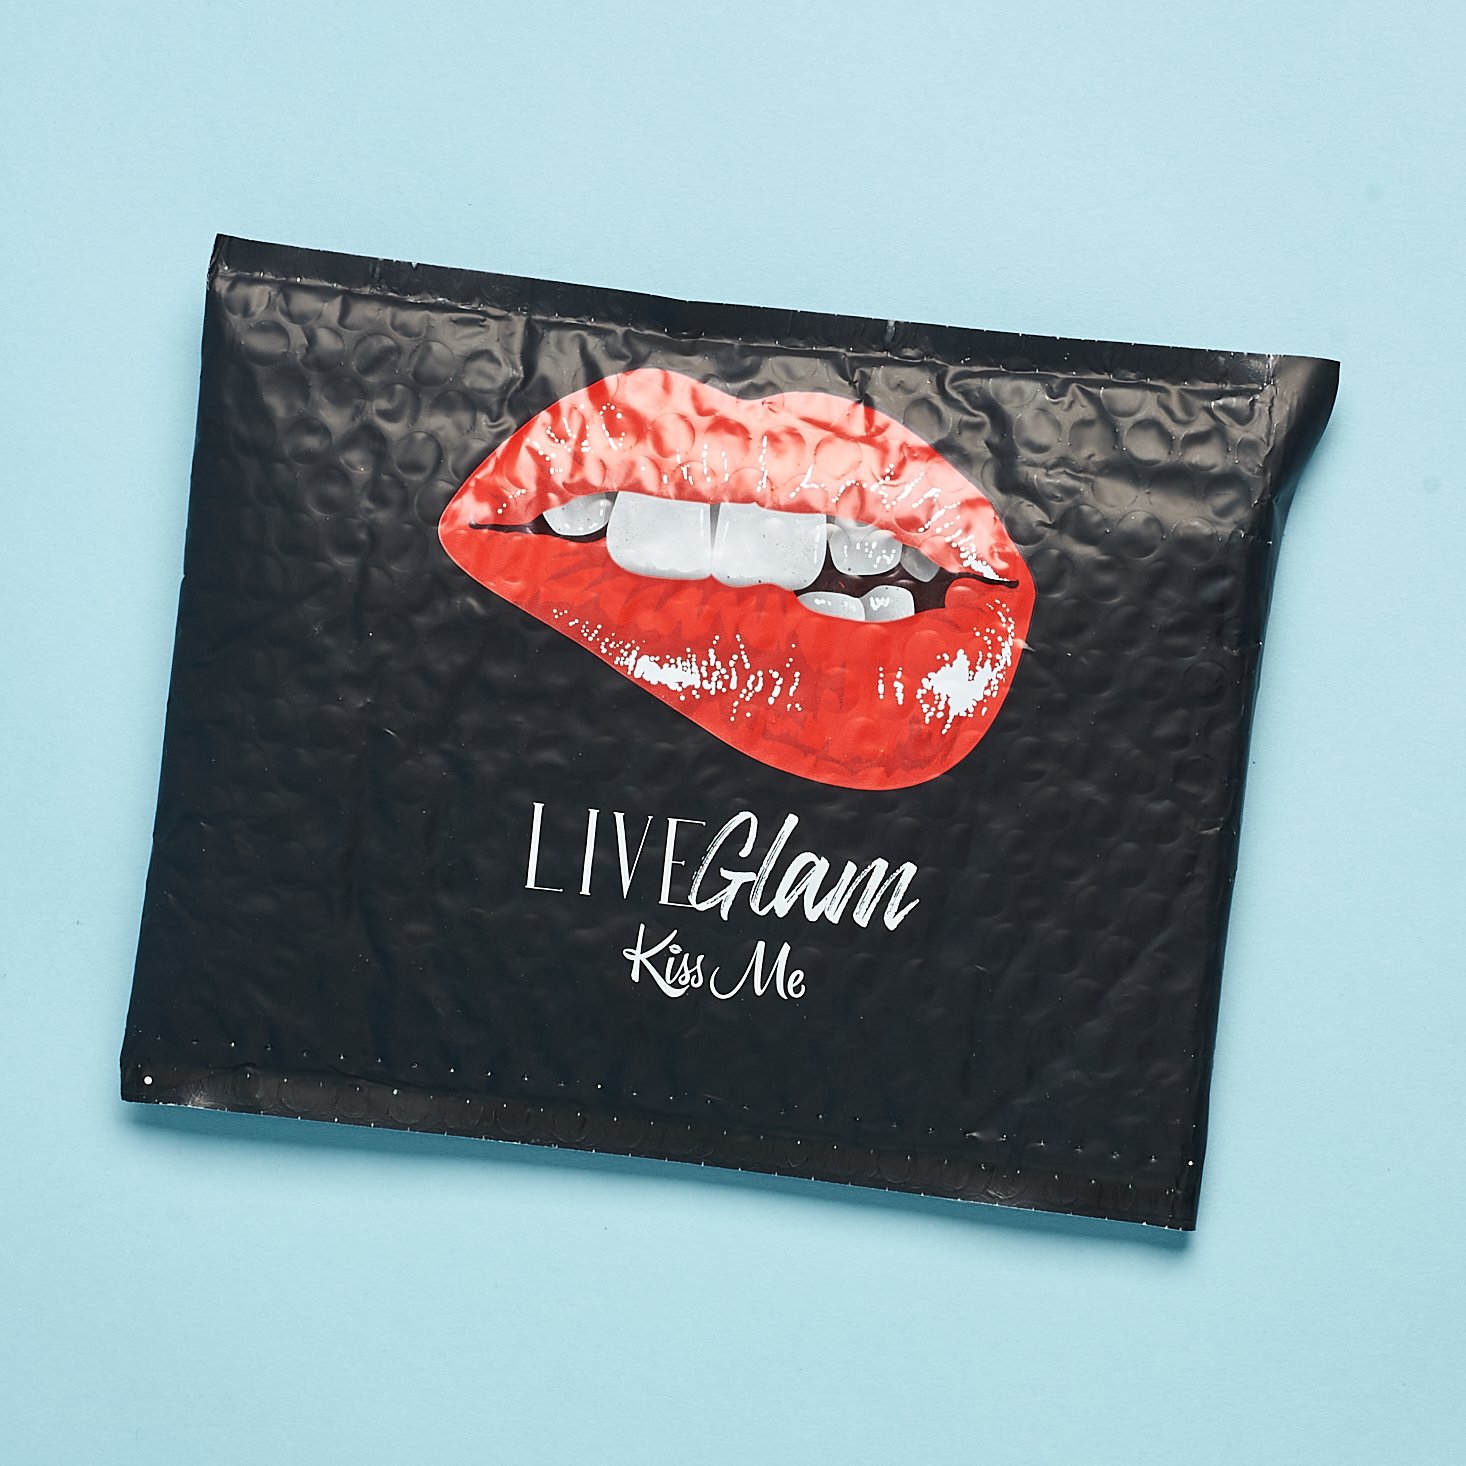 LiveGlam KissMe Lipstick Review + Coupon – March 2020